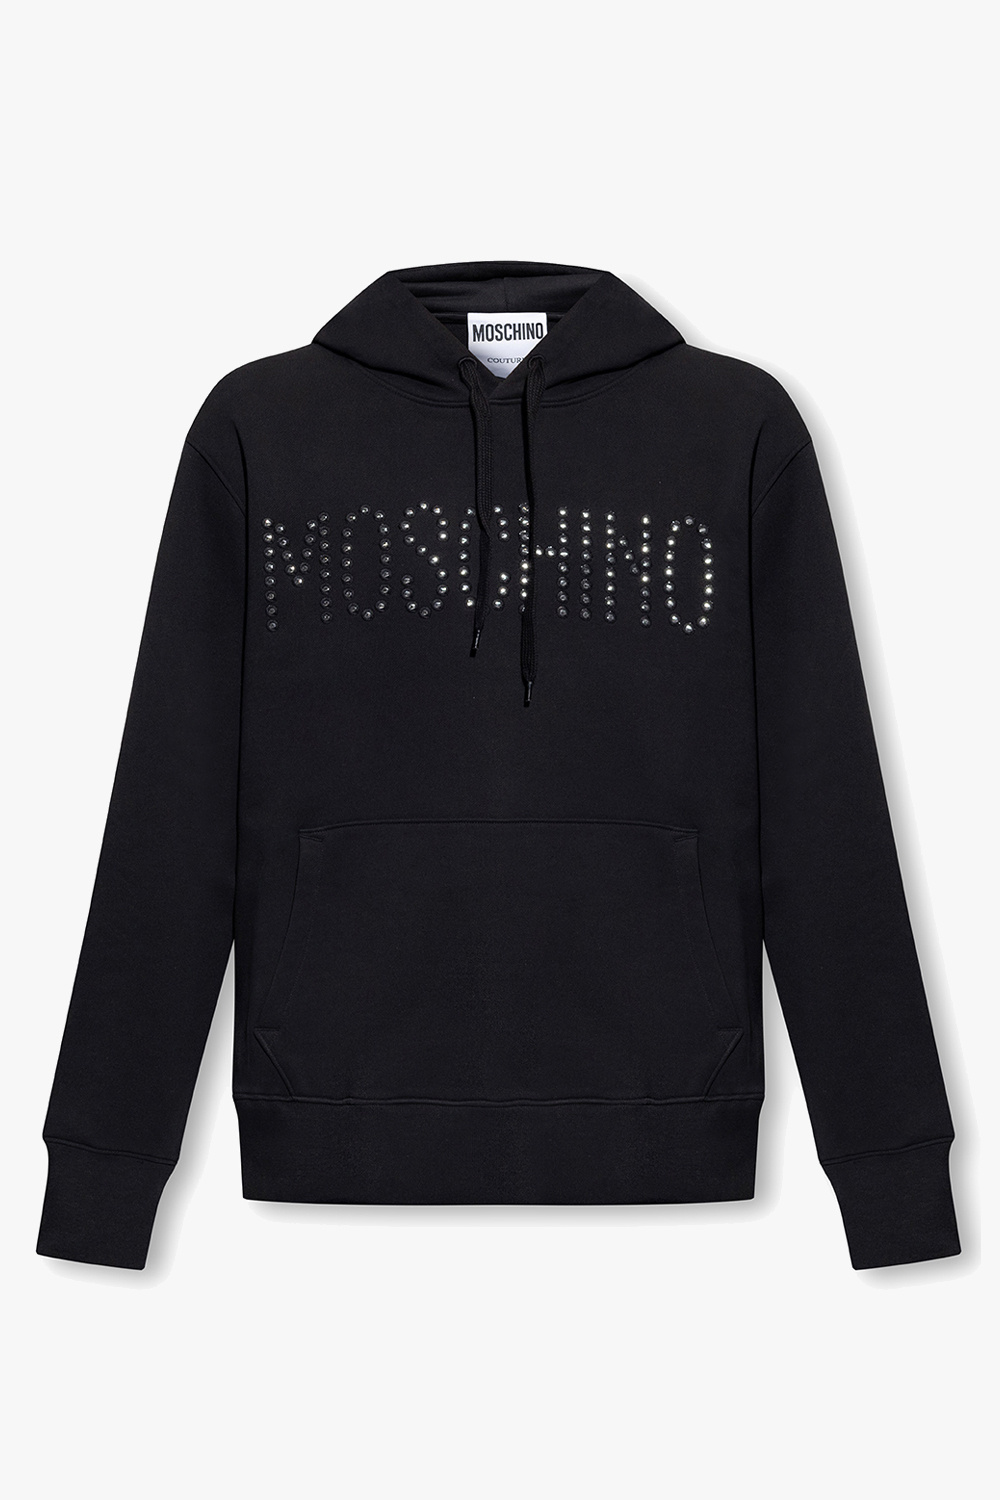 Black Hoodie with logo Moschino - Vitkac Australia